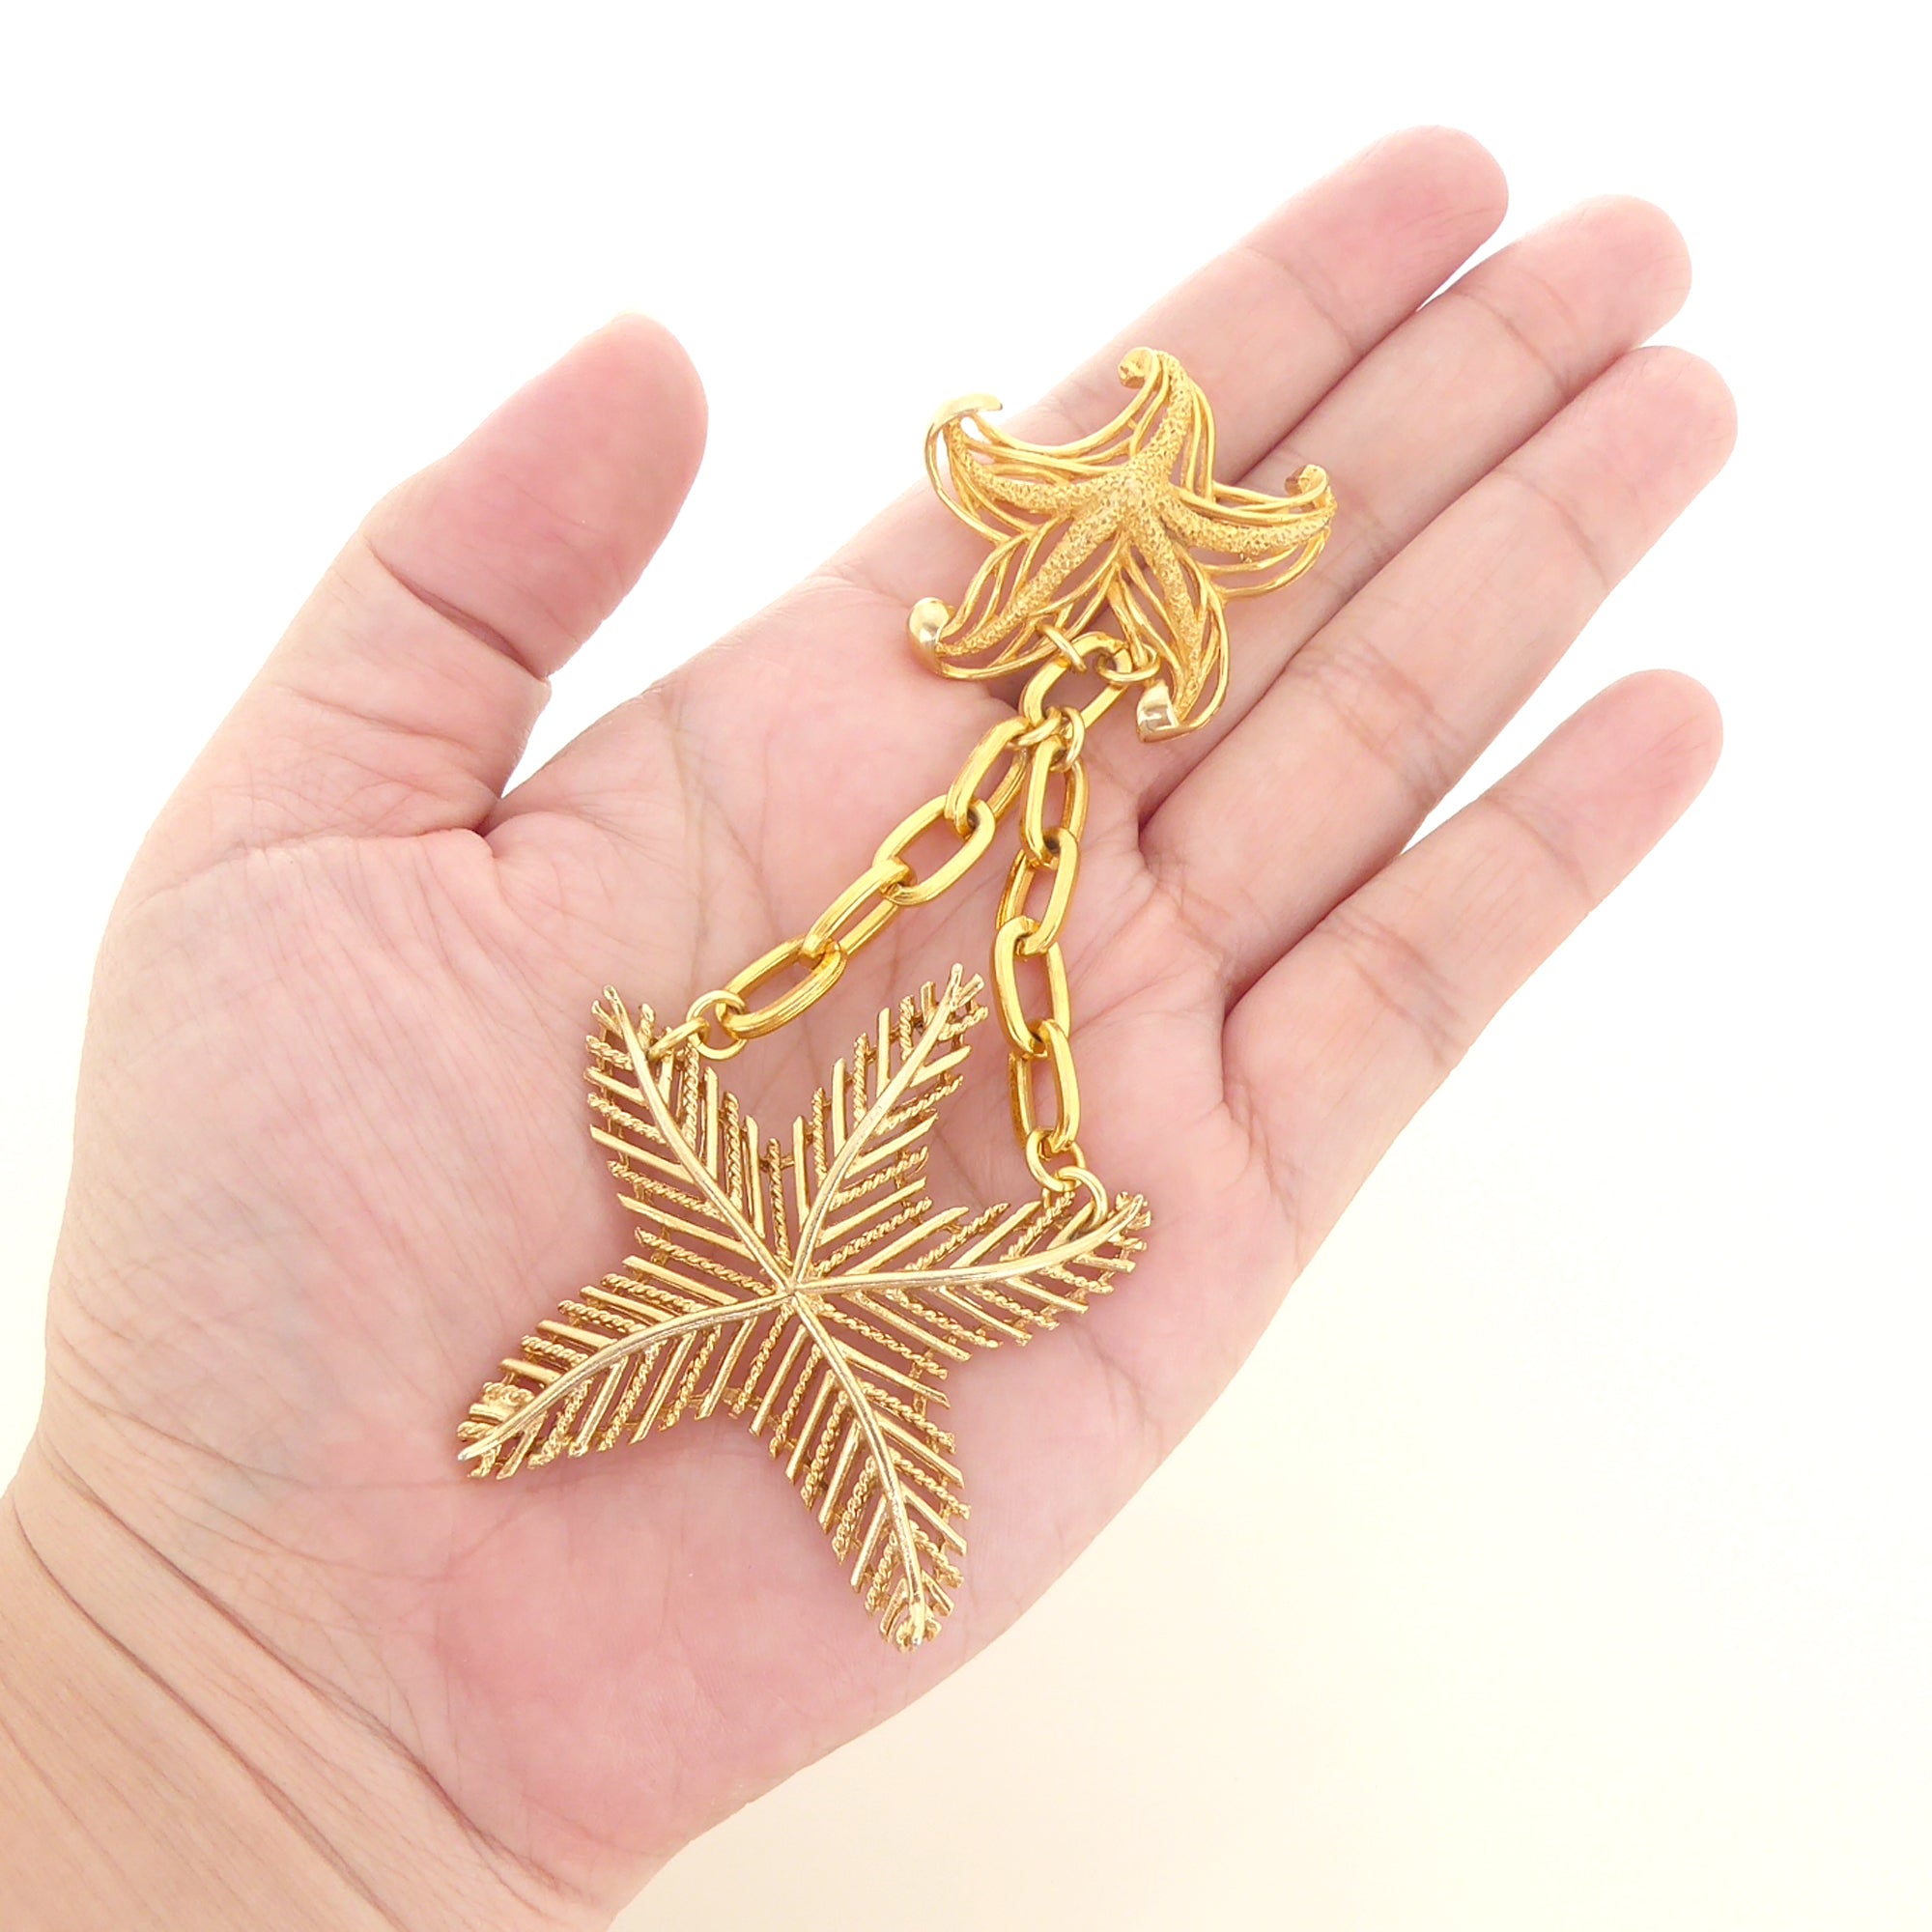 Gold starfish brooch by Jenny Dayco 7